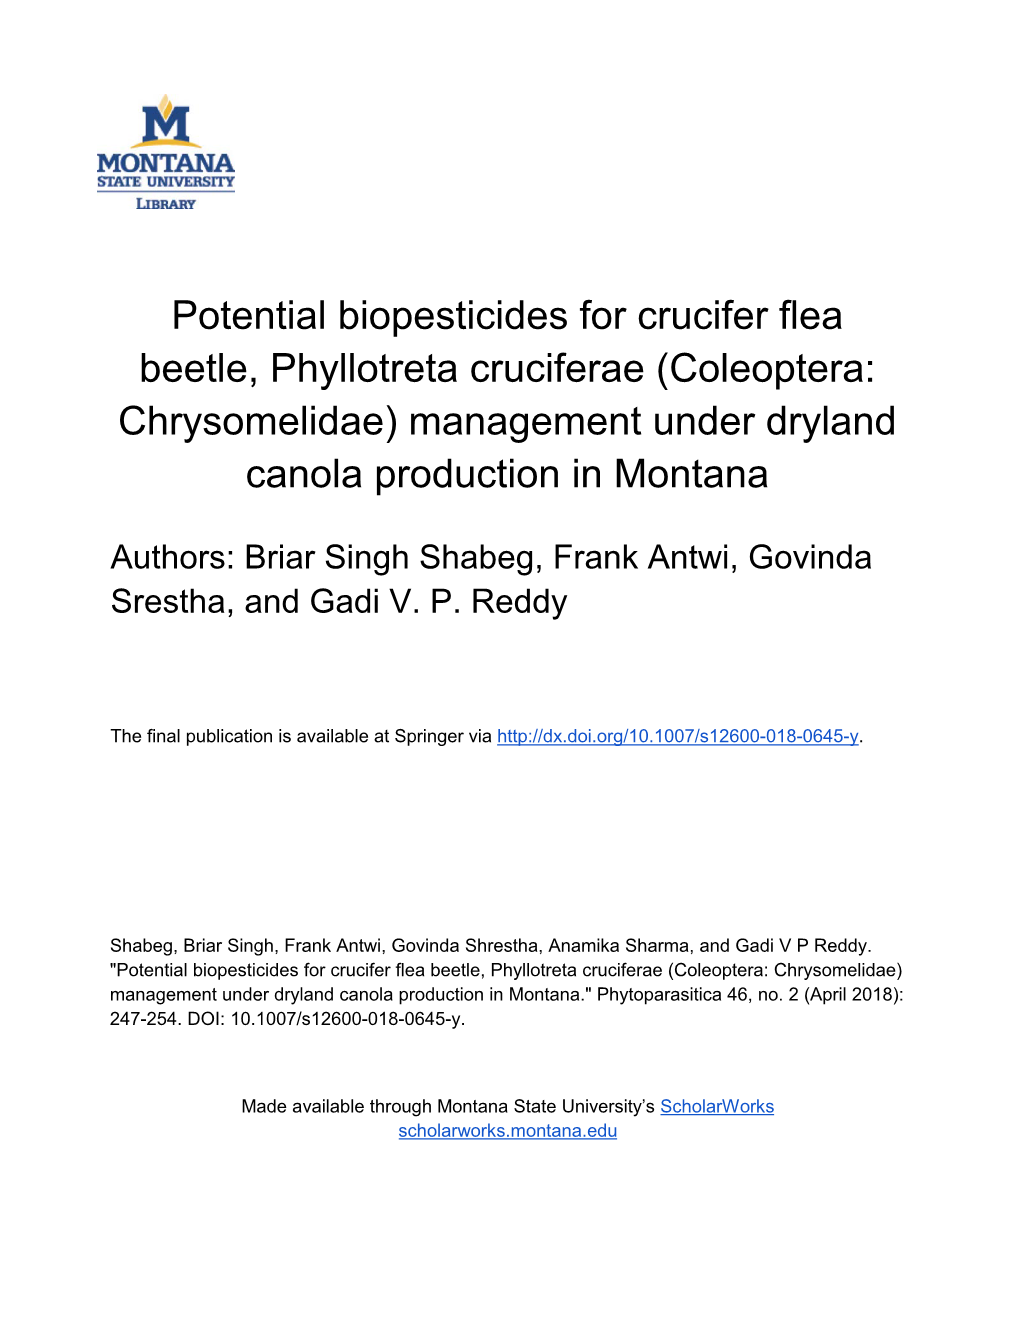 Potential Biopesticides for Crucifer Flea Beetle, Phyllotreta Cruciferae (Coleoptera: Chrysomelidae) Management Under Dryland Canola Production in Montana